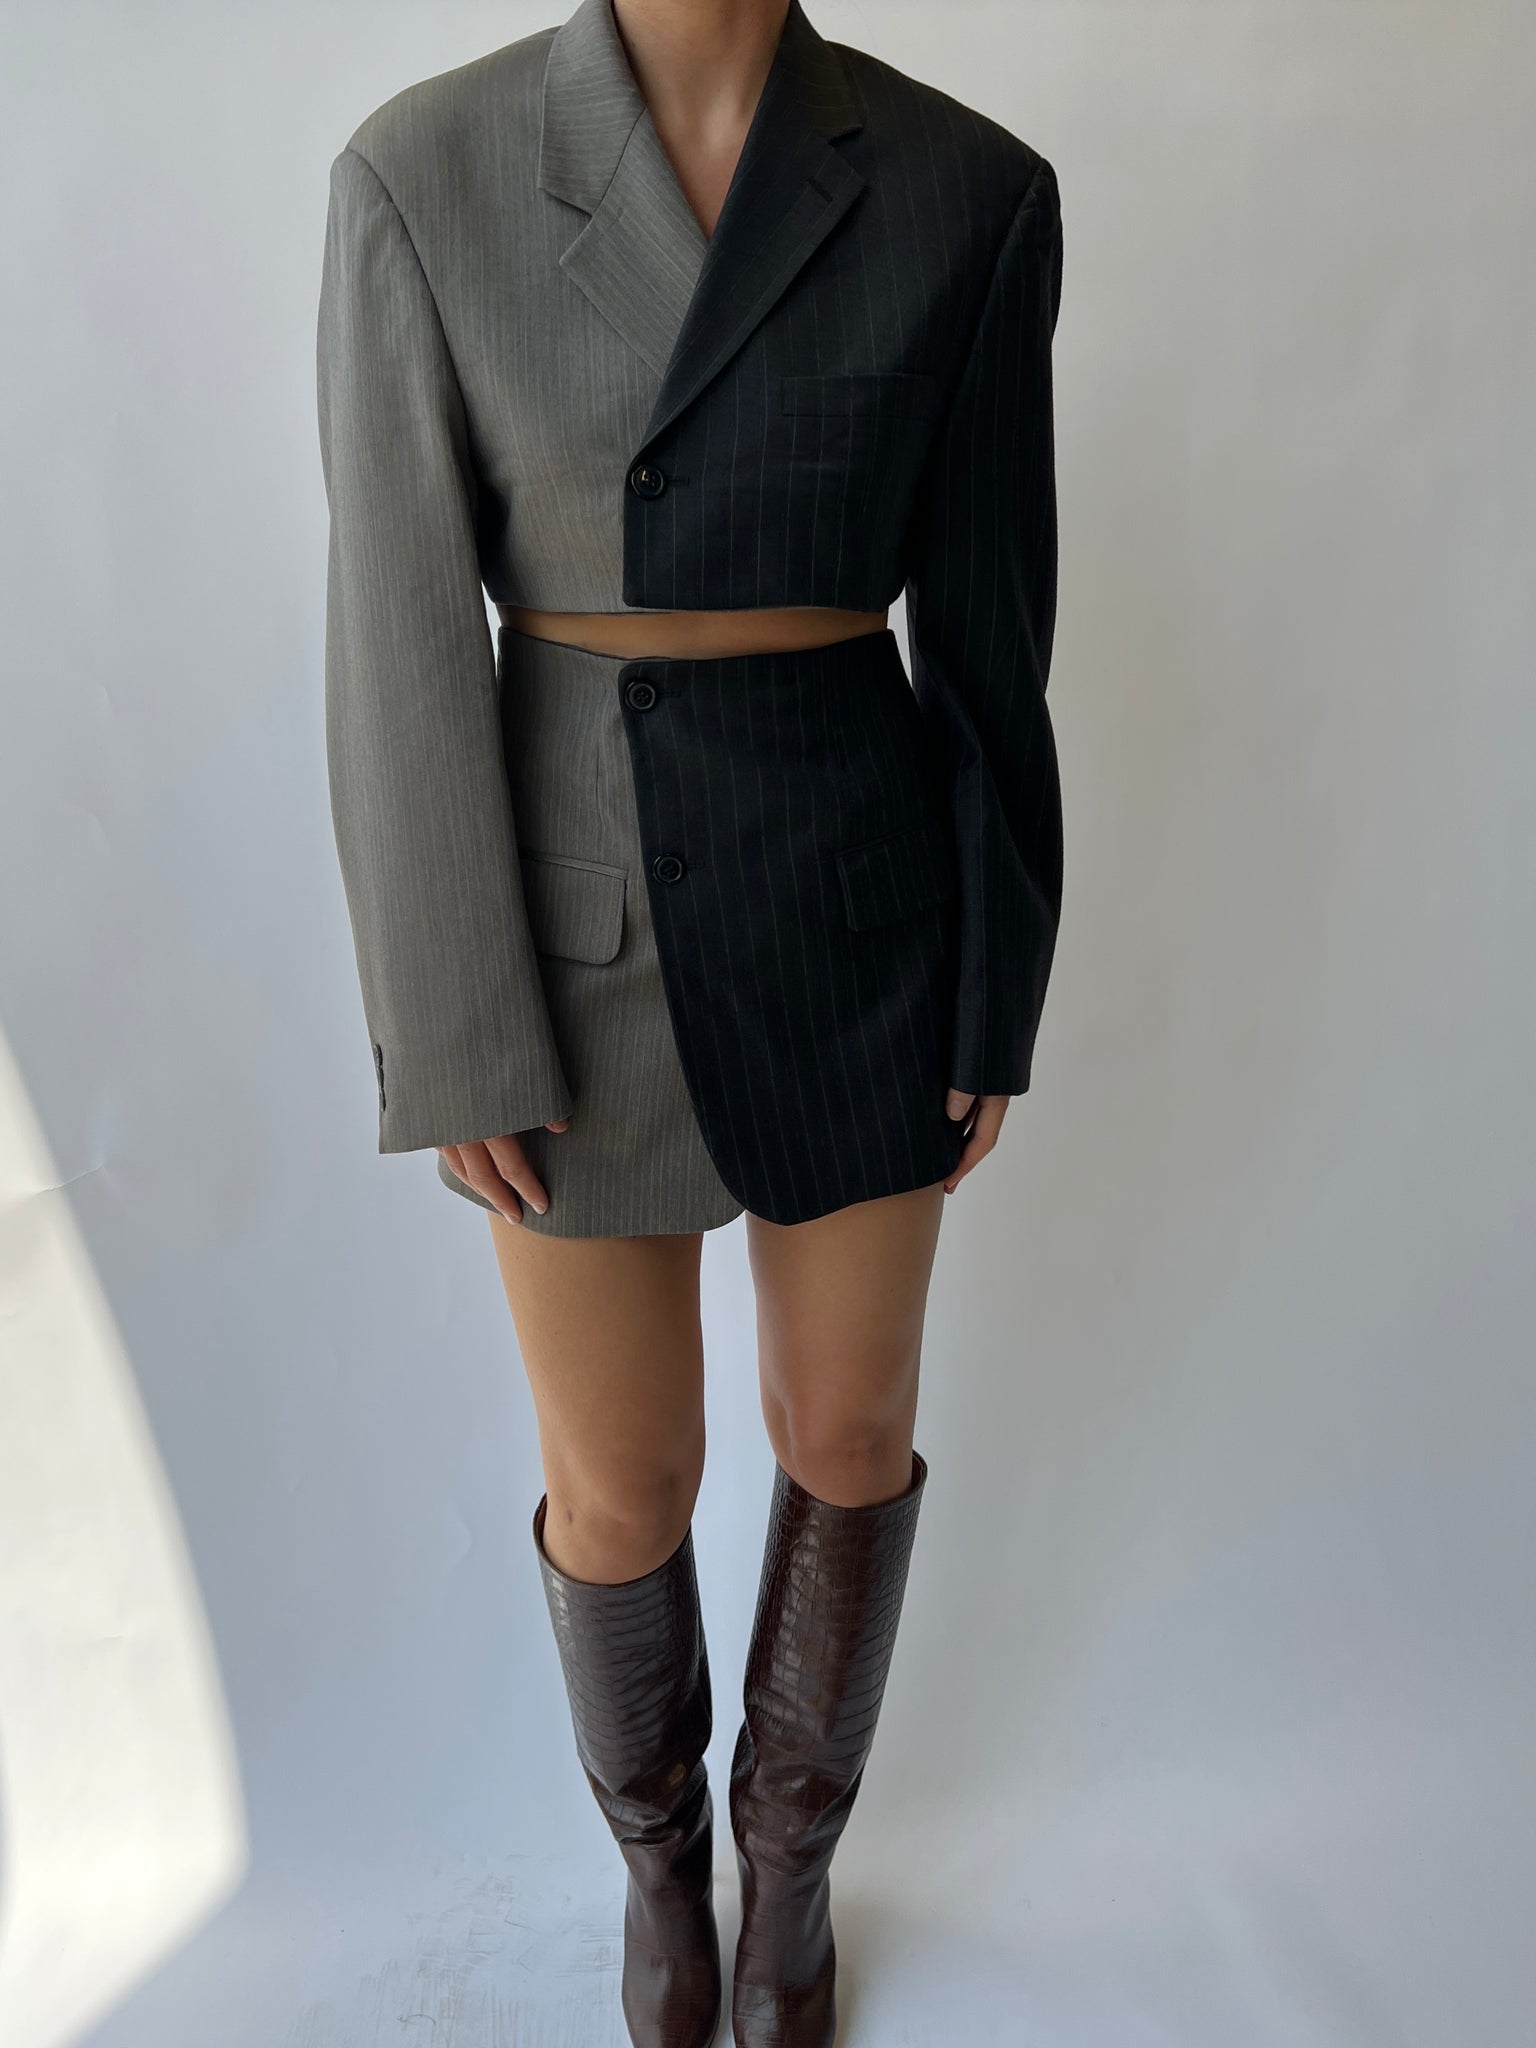 Pale grey and dark grey pinstriped skirt set